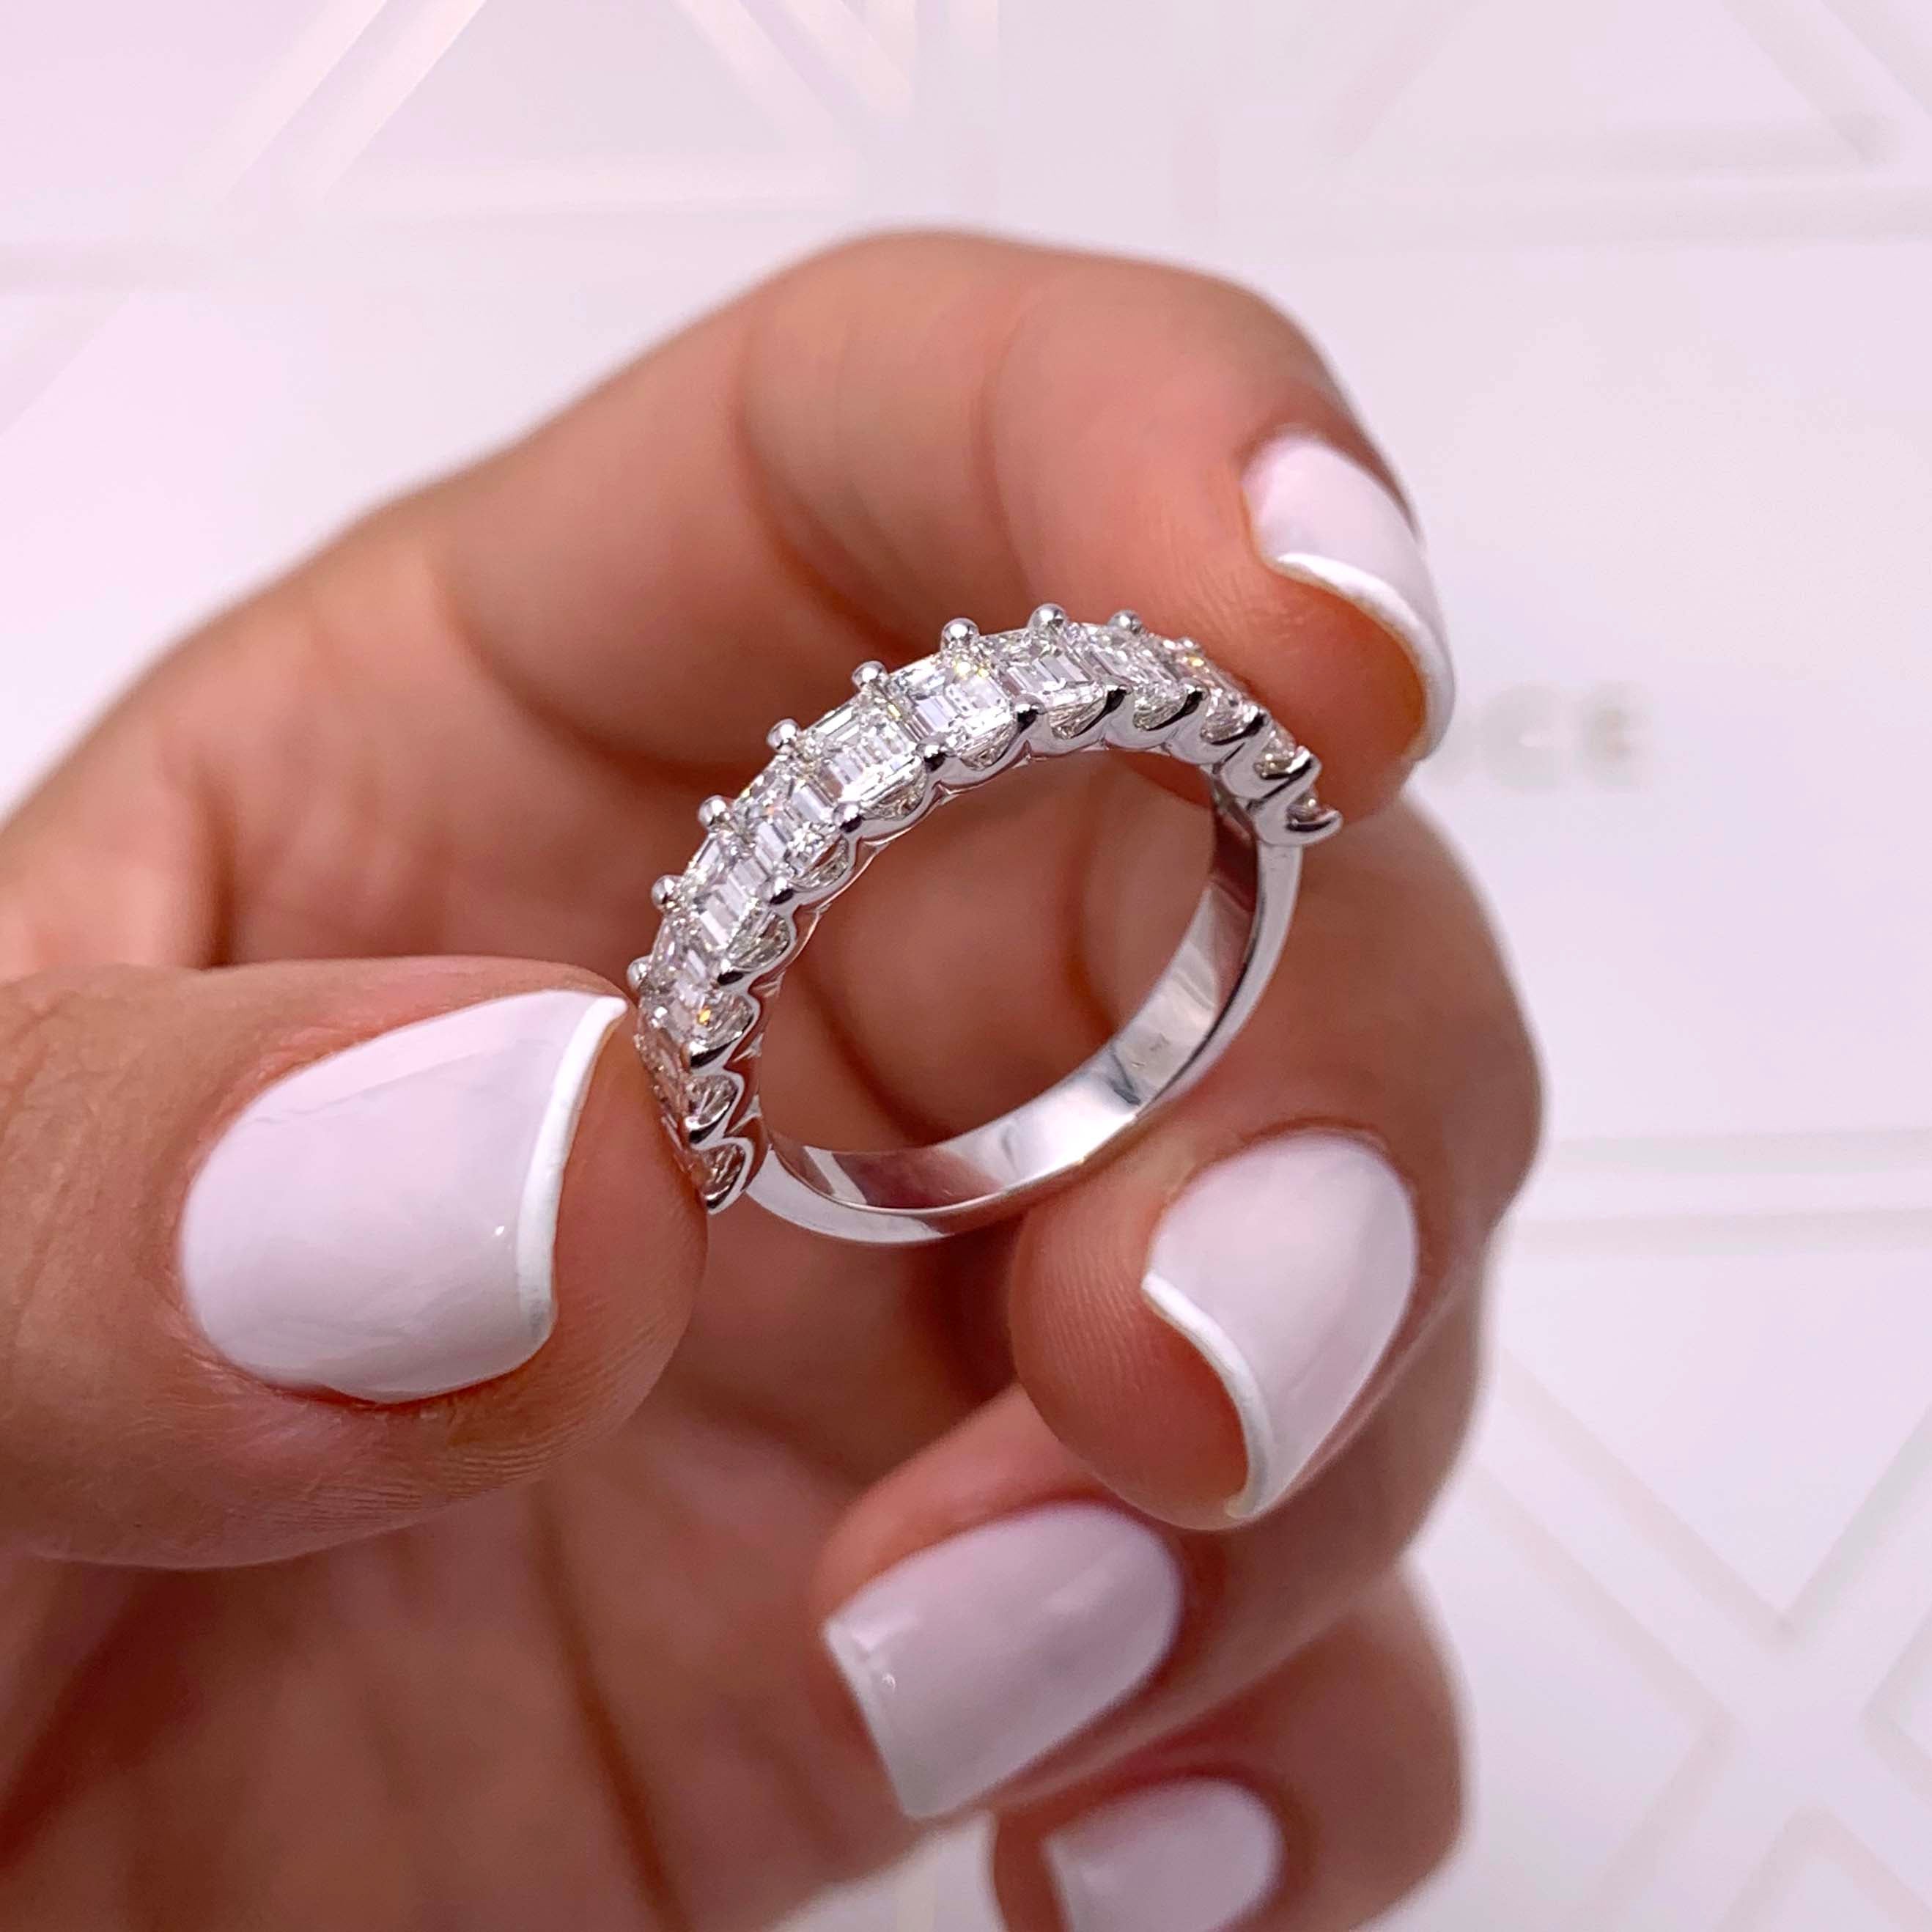 Gina Half Eternity Wedding Ring   (2.5 Carat) -14K White Gold